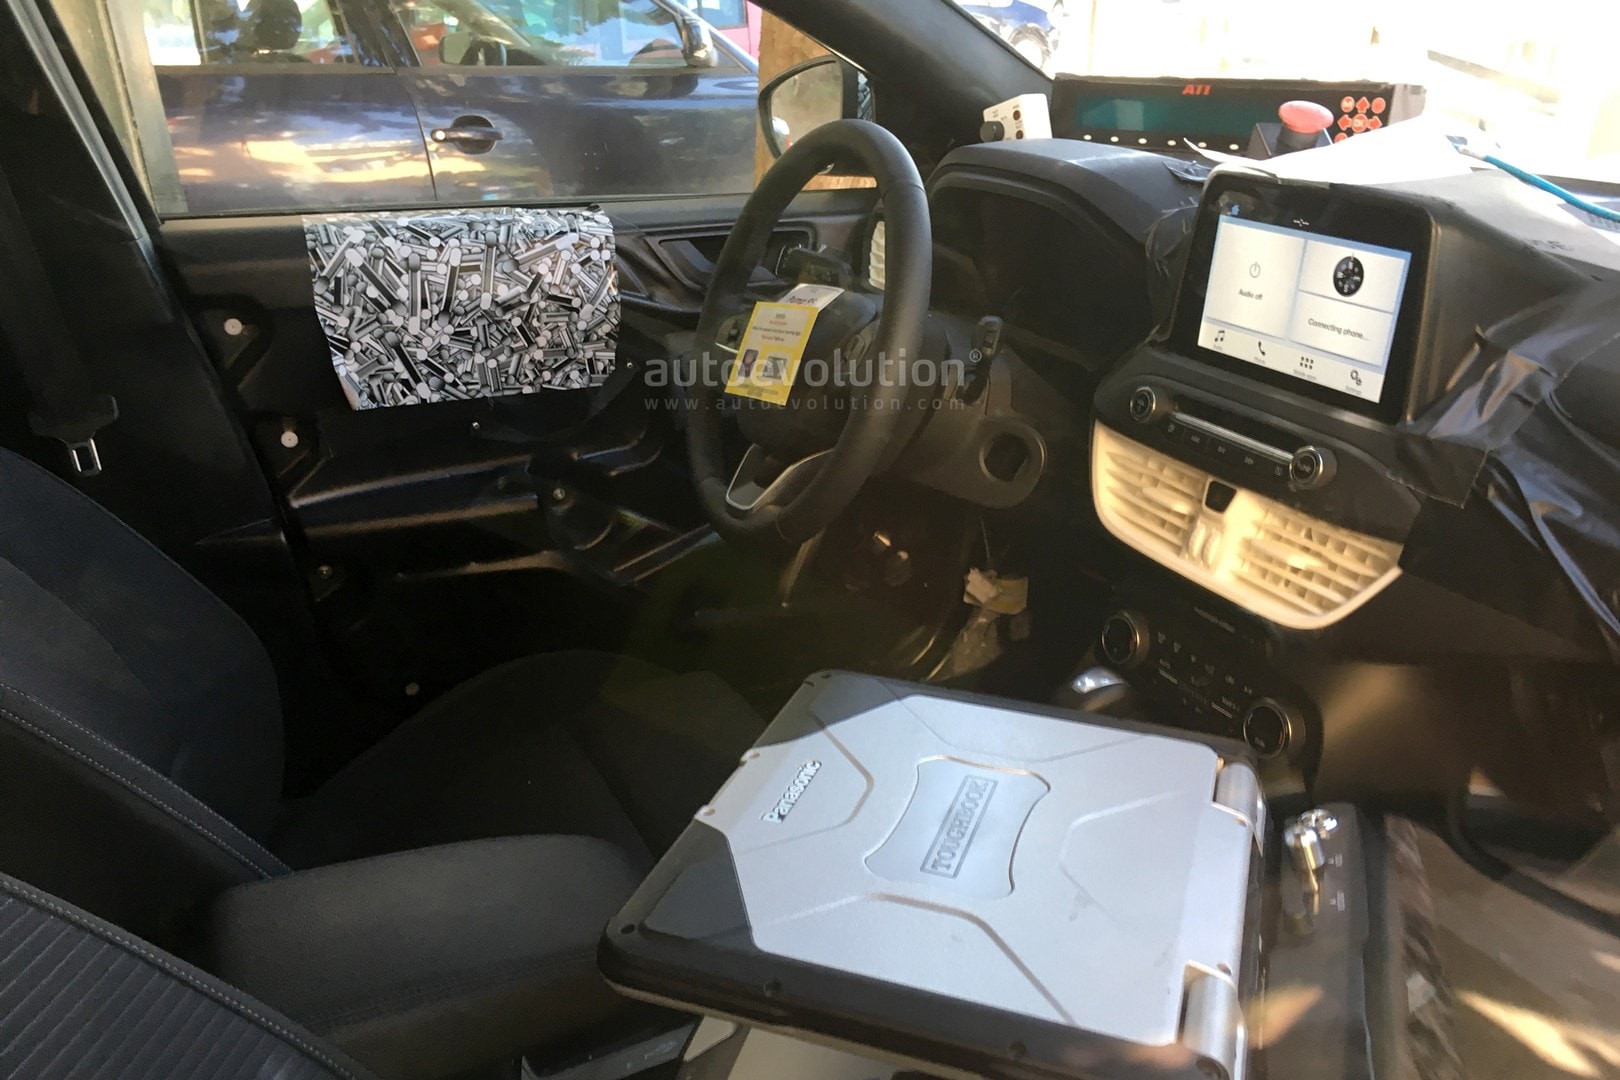 2019 Ford Focus Interior Spied In Detail Has Digital Dash